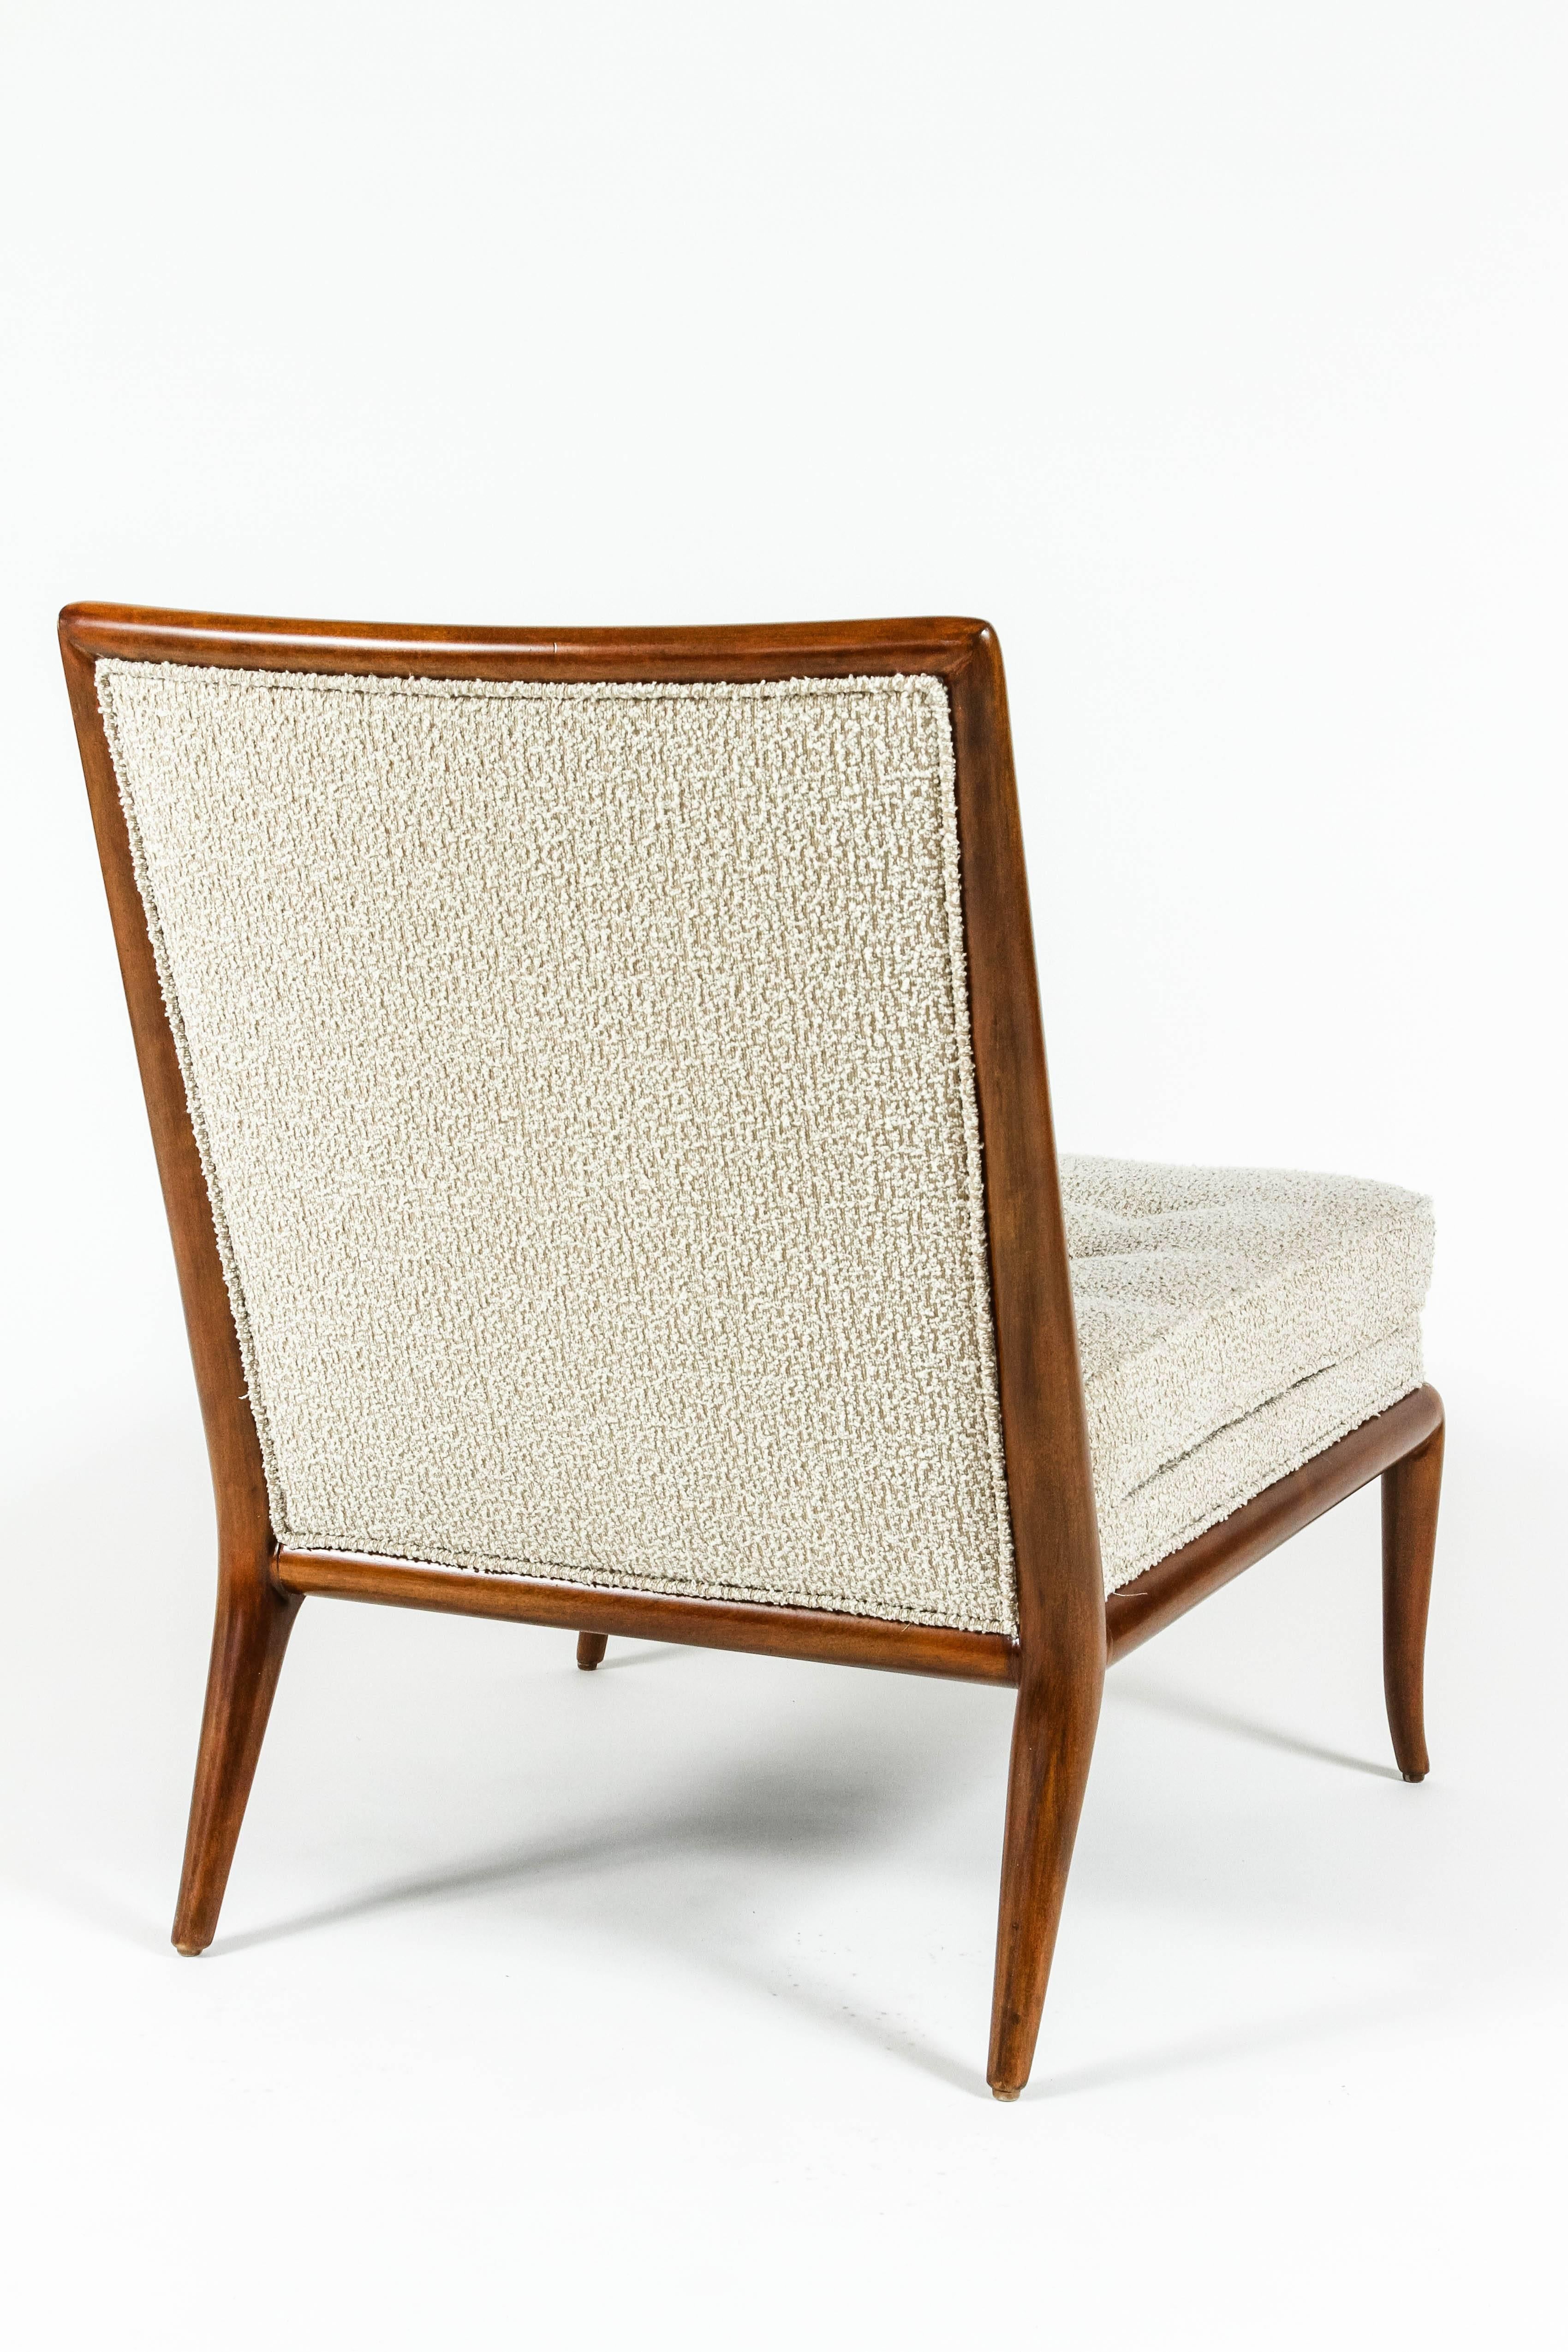 American Pair of Slipper Chairs by T.H. Robsjohn-Gibbings for Widdicomb